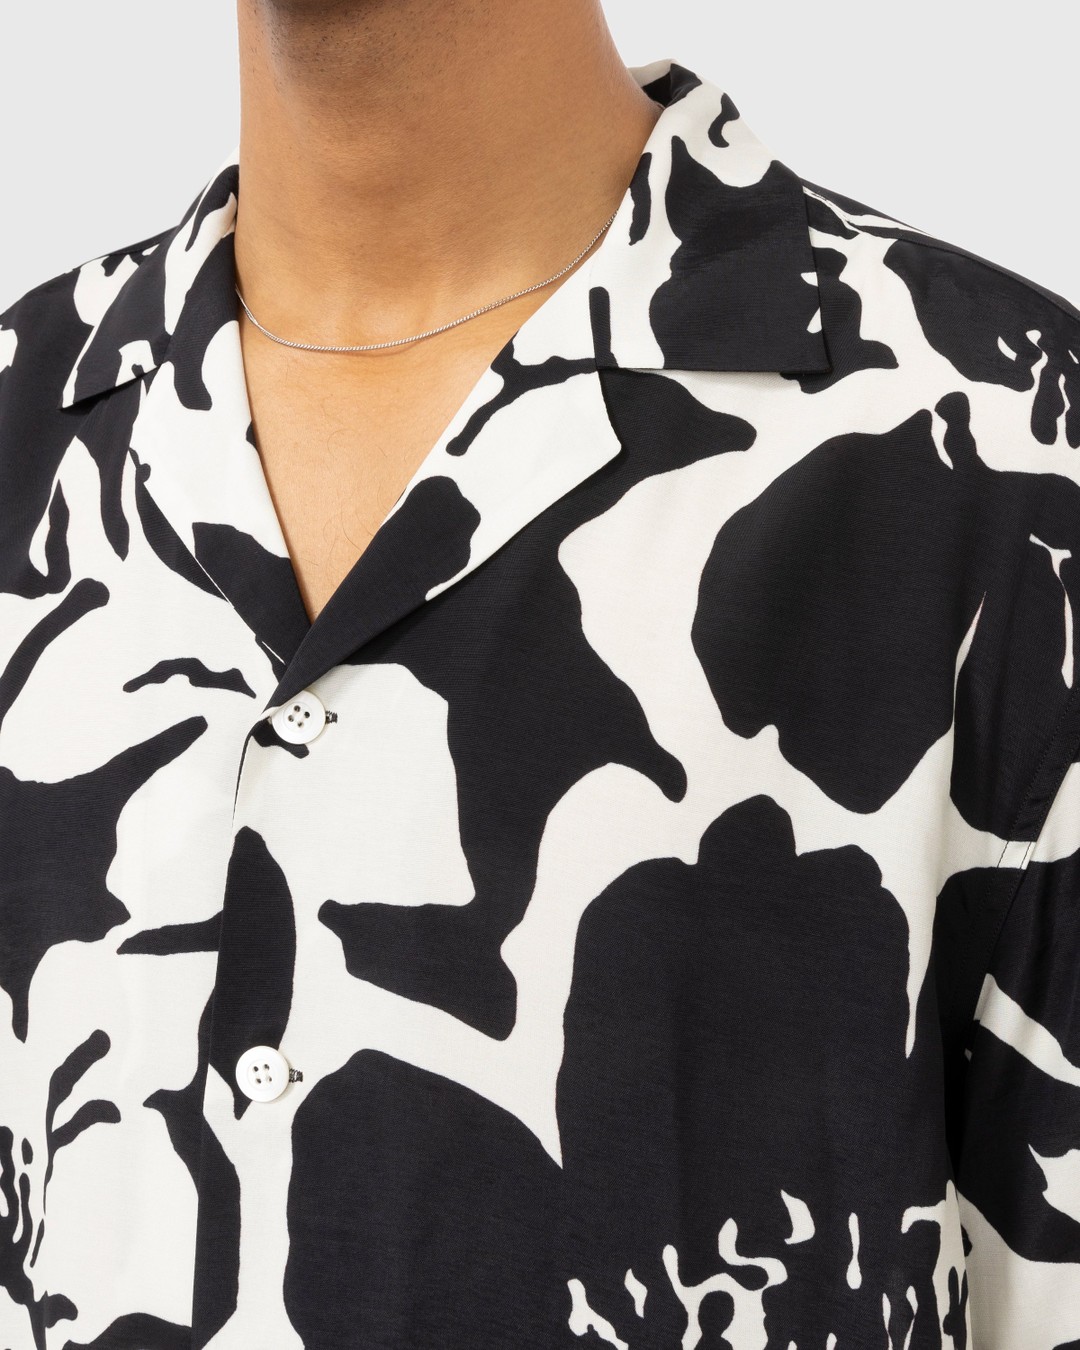 Dries van Noten – Floral Cassi Shirt Multi - Shortsleeve Shirts - Multi - Image 5